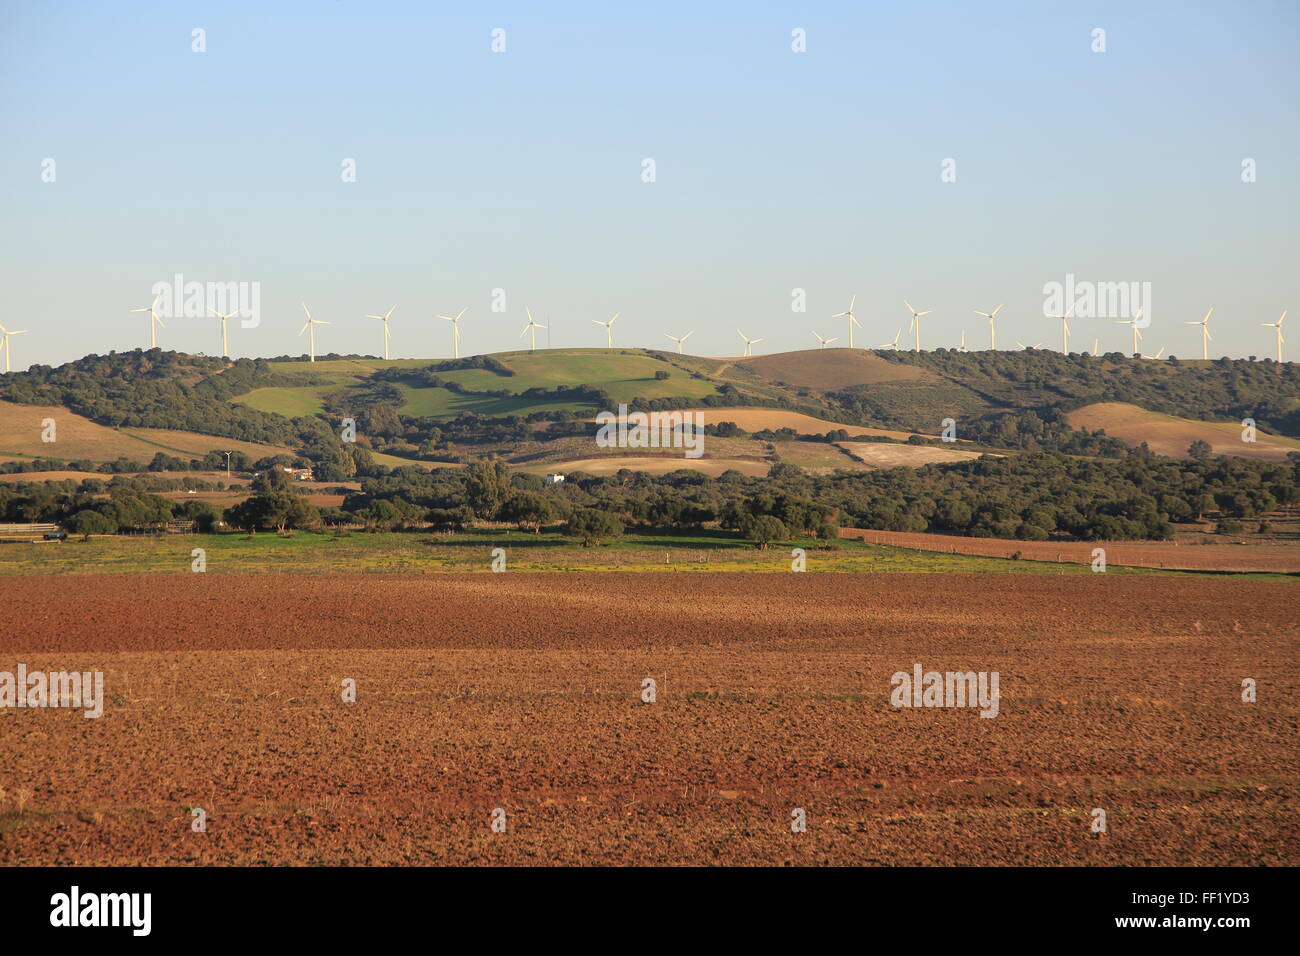 Farming landscape with wind turbines in distance, Vejer de la Frontera, Cadiz province, Spain Stock Photo